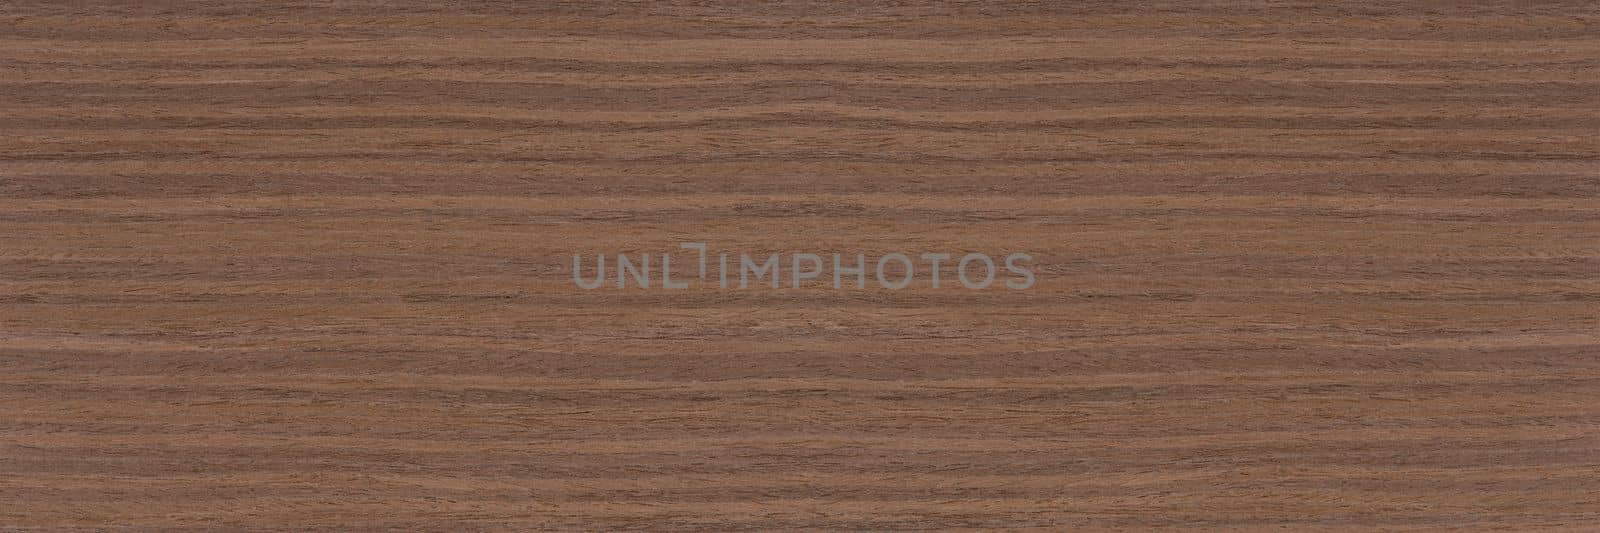 Dark brown walnut wood texture, natural wood pattern for making furniture, parquet or doors. Top view of natural veneer. by SERSOL